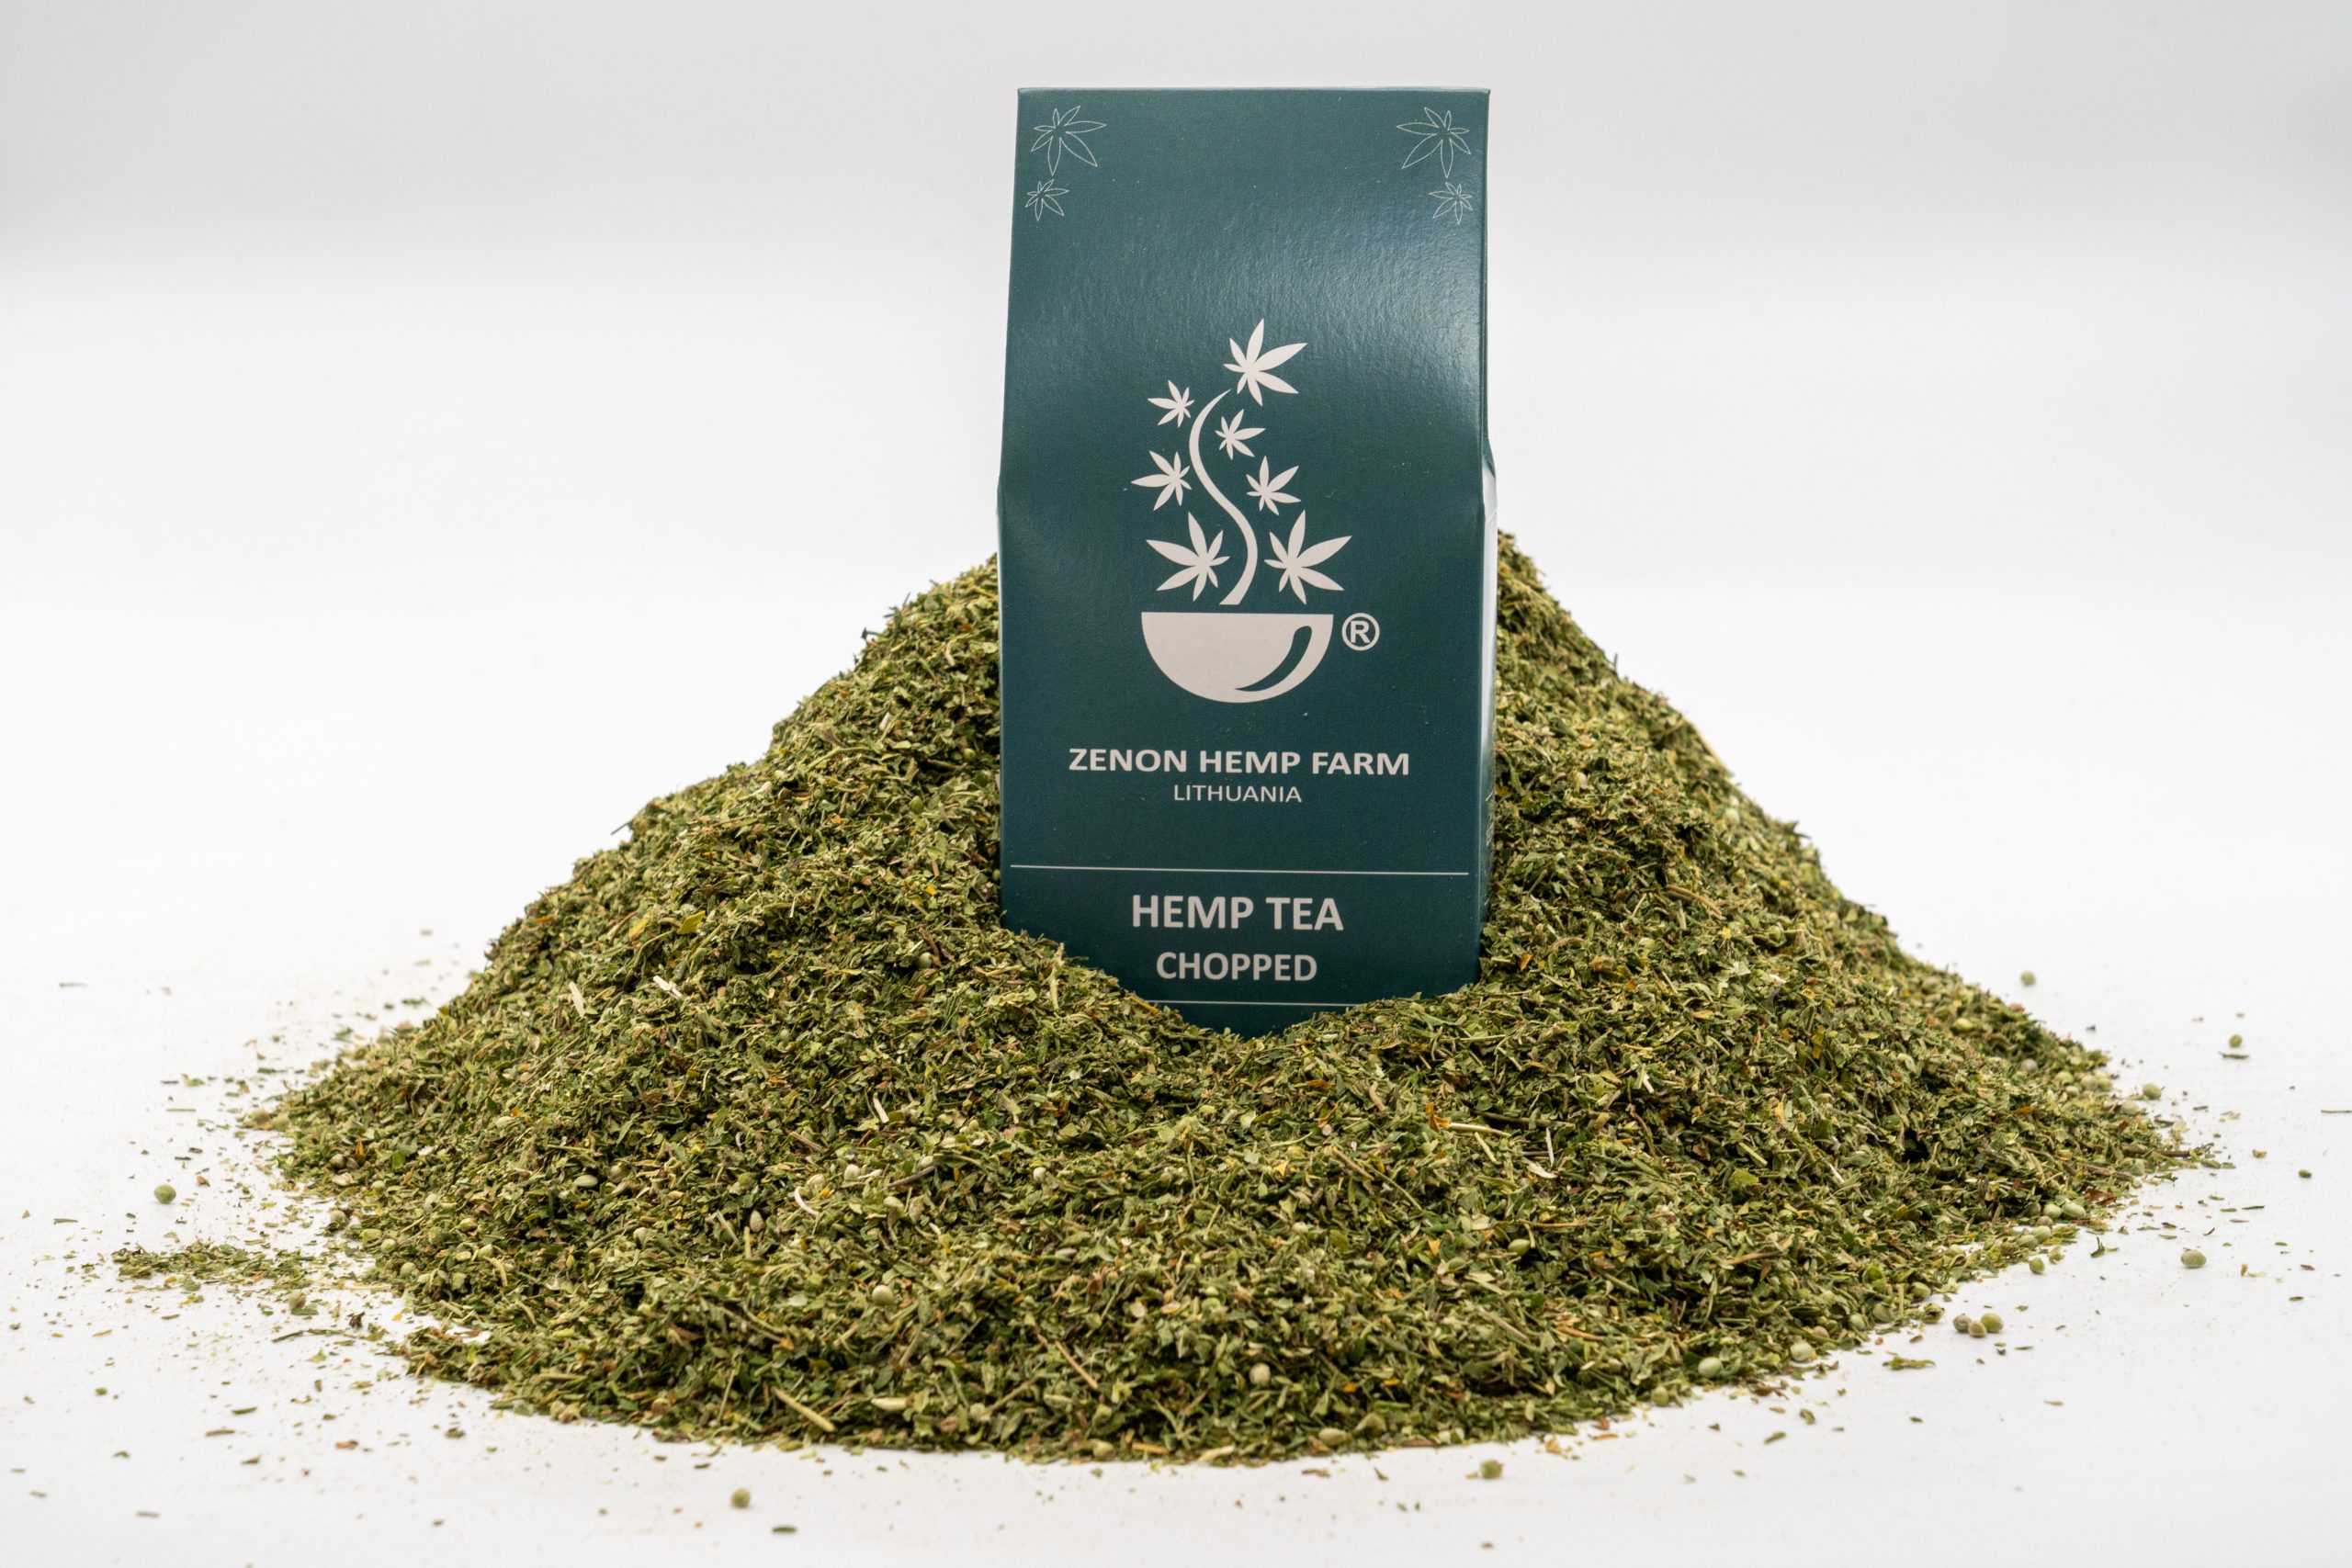 Lithuania’s premier hemp tea producers